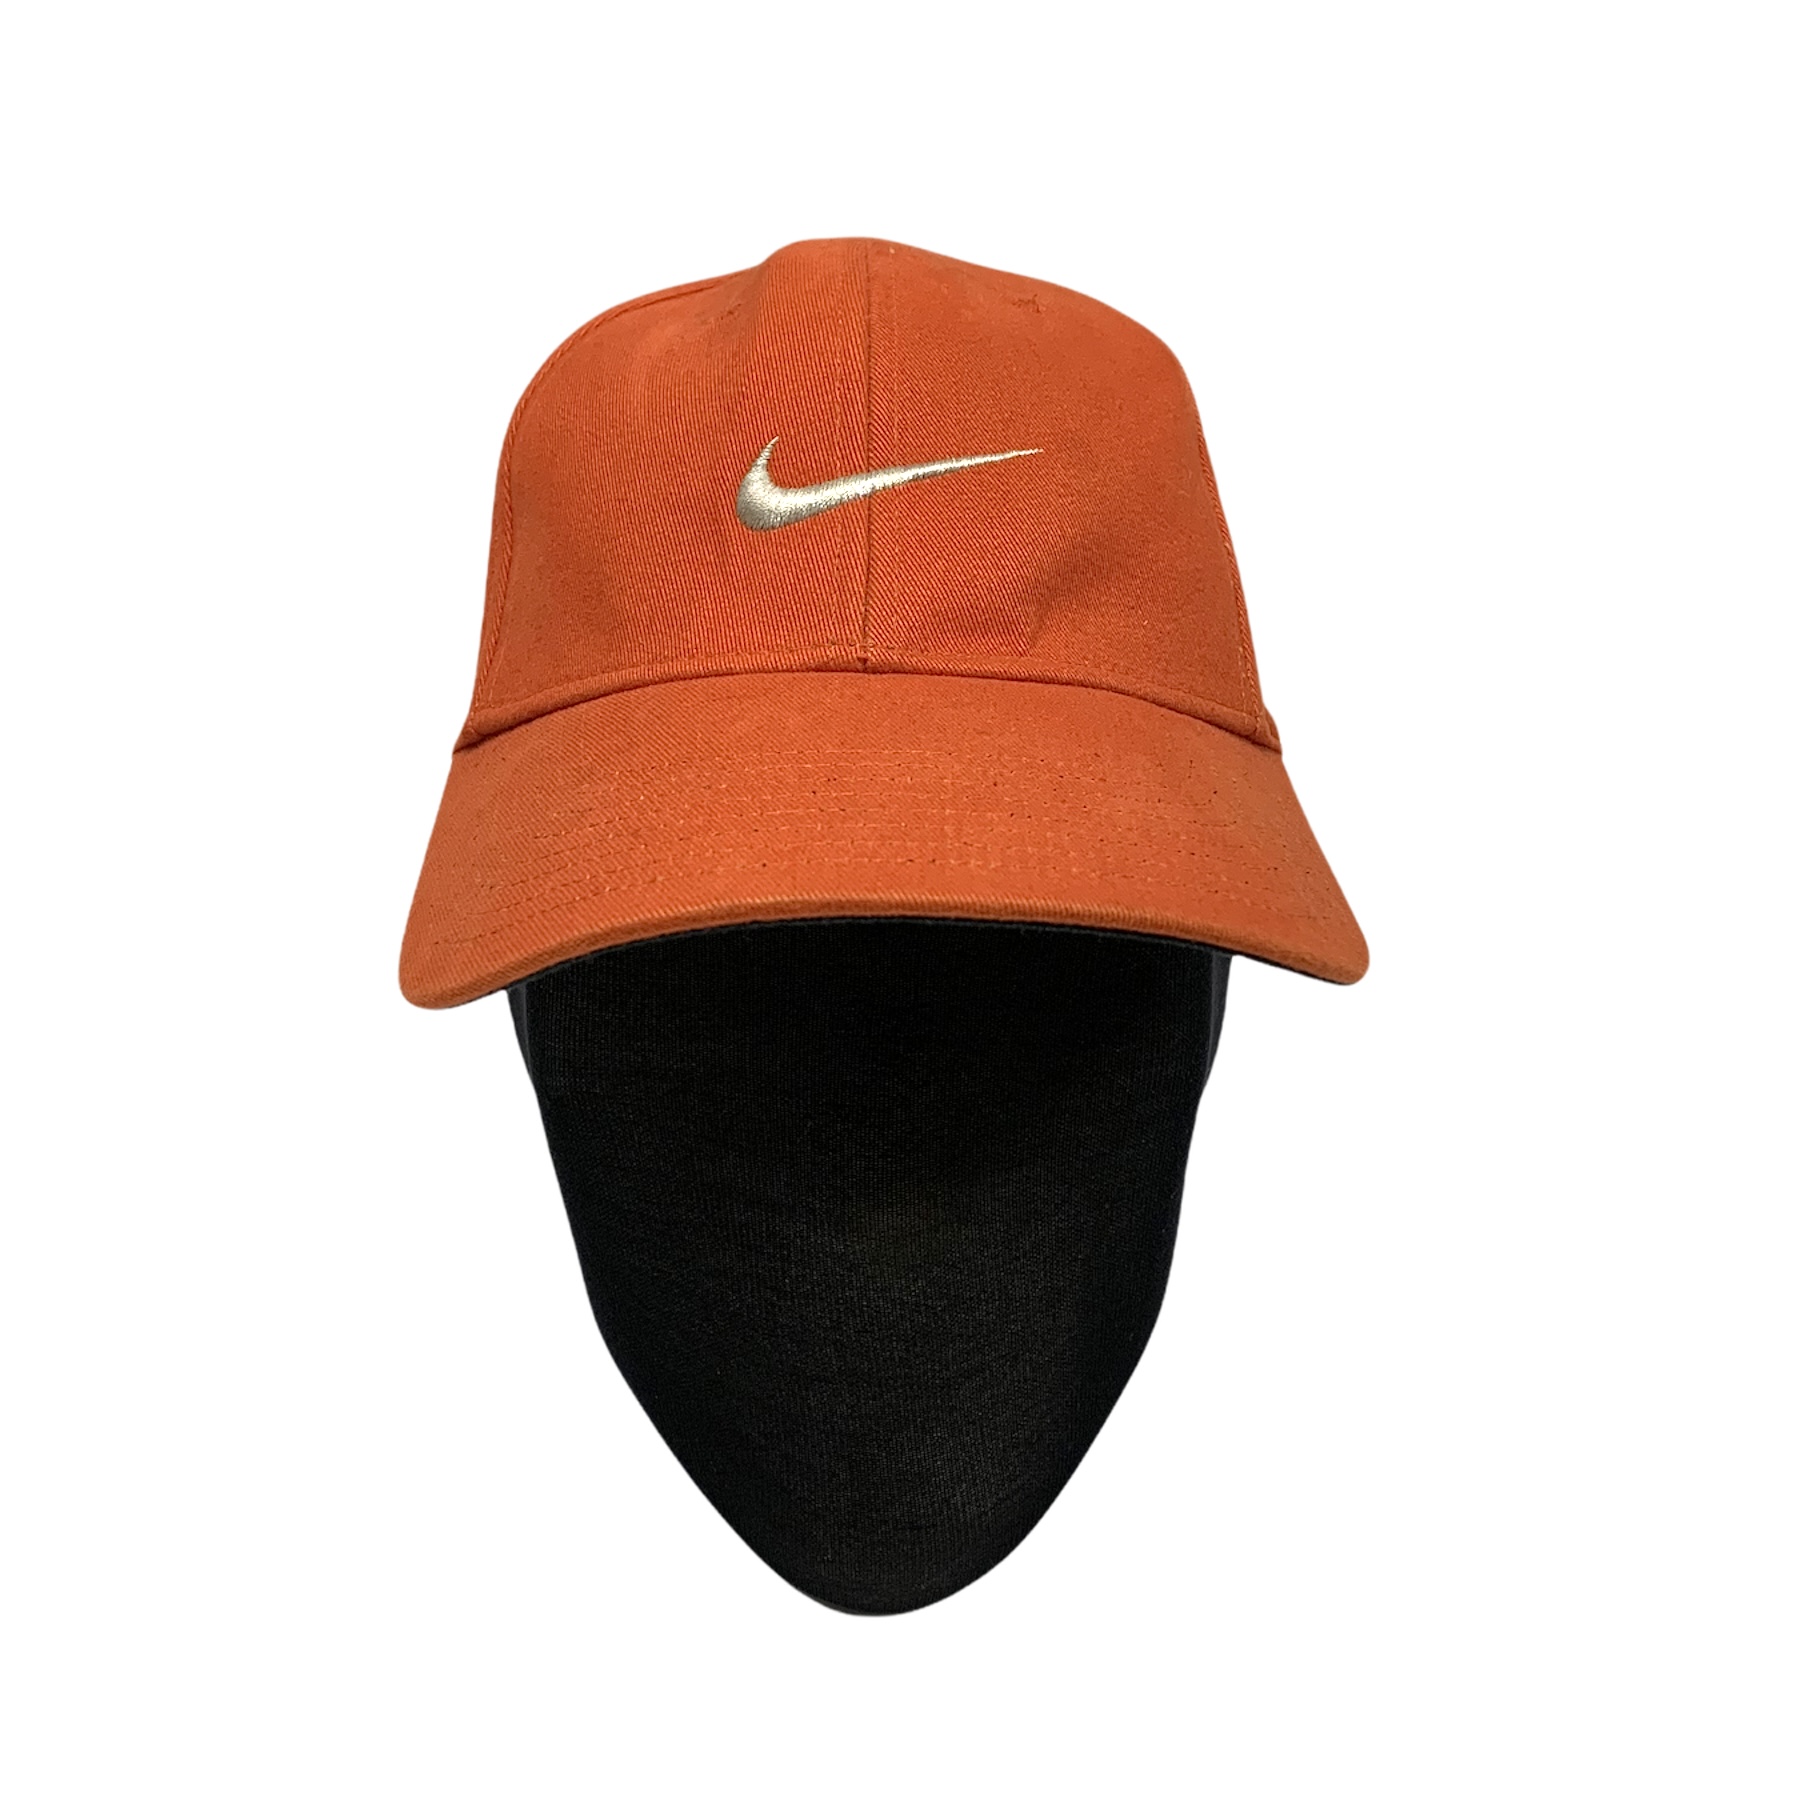 Nike bootleg cap - Lowkey Archives